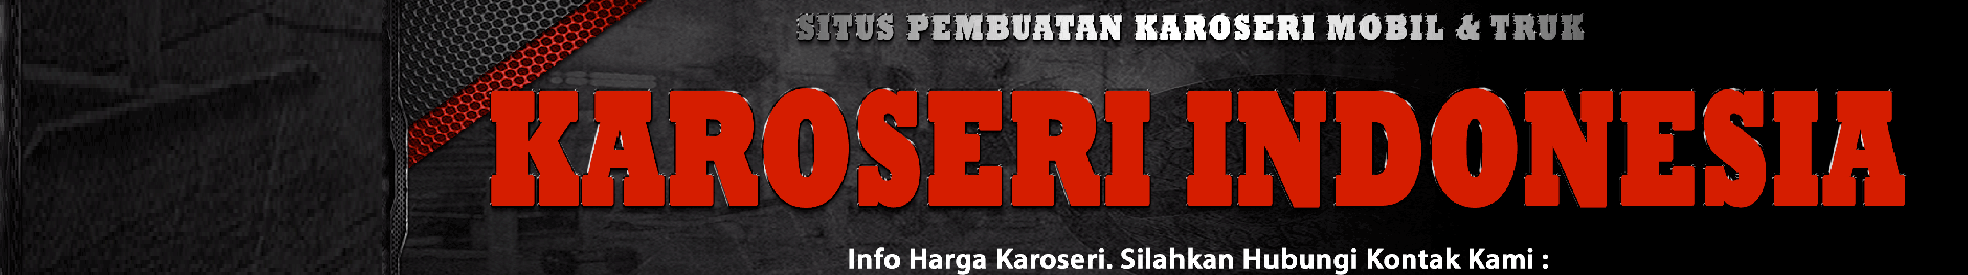 Baner profilu użytkownika Karoseri Jakarta